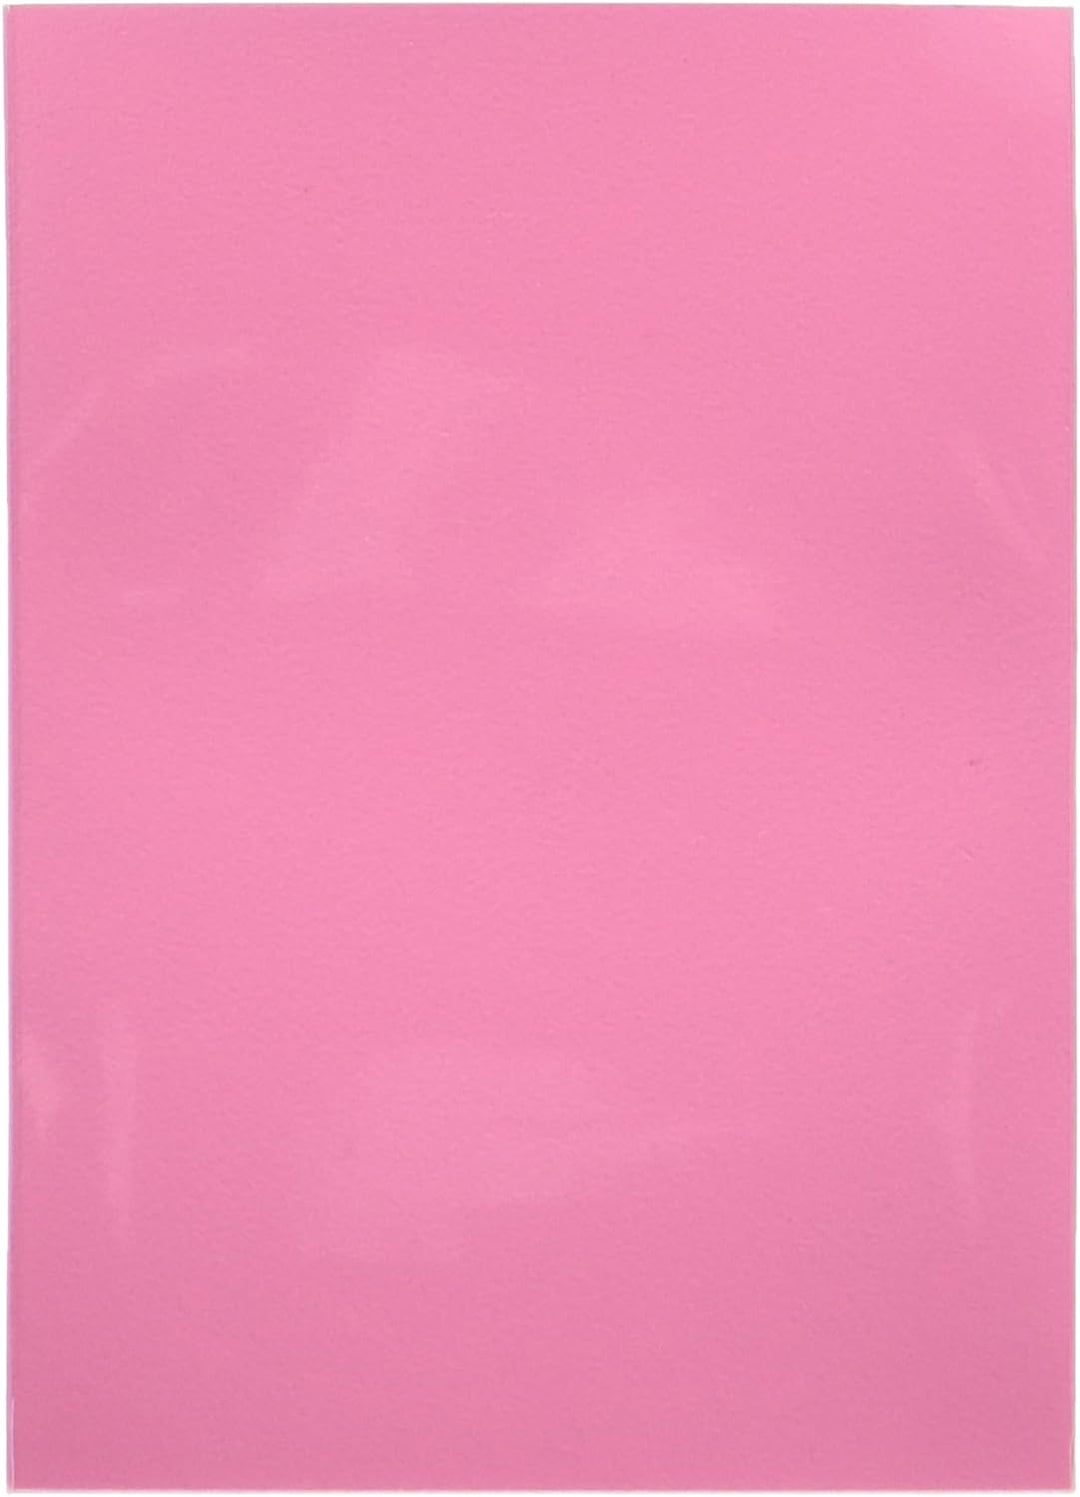 Dragon Shield ART11012 Standard Size Sleeves 100pk-Pink, Matte Pink